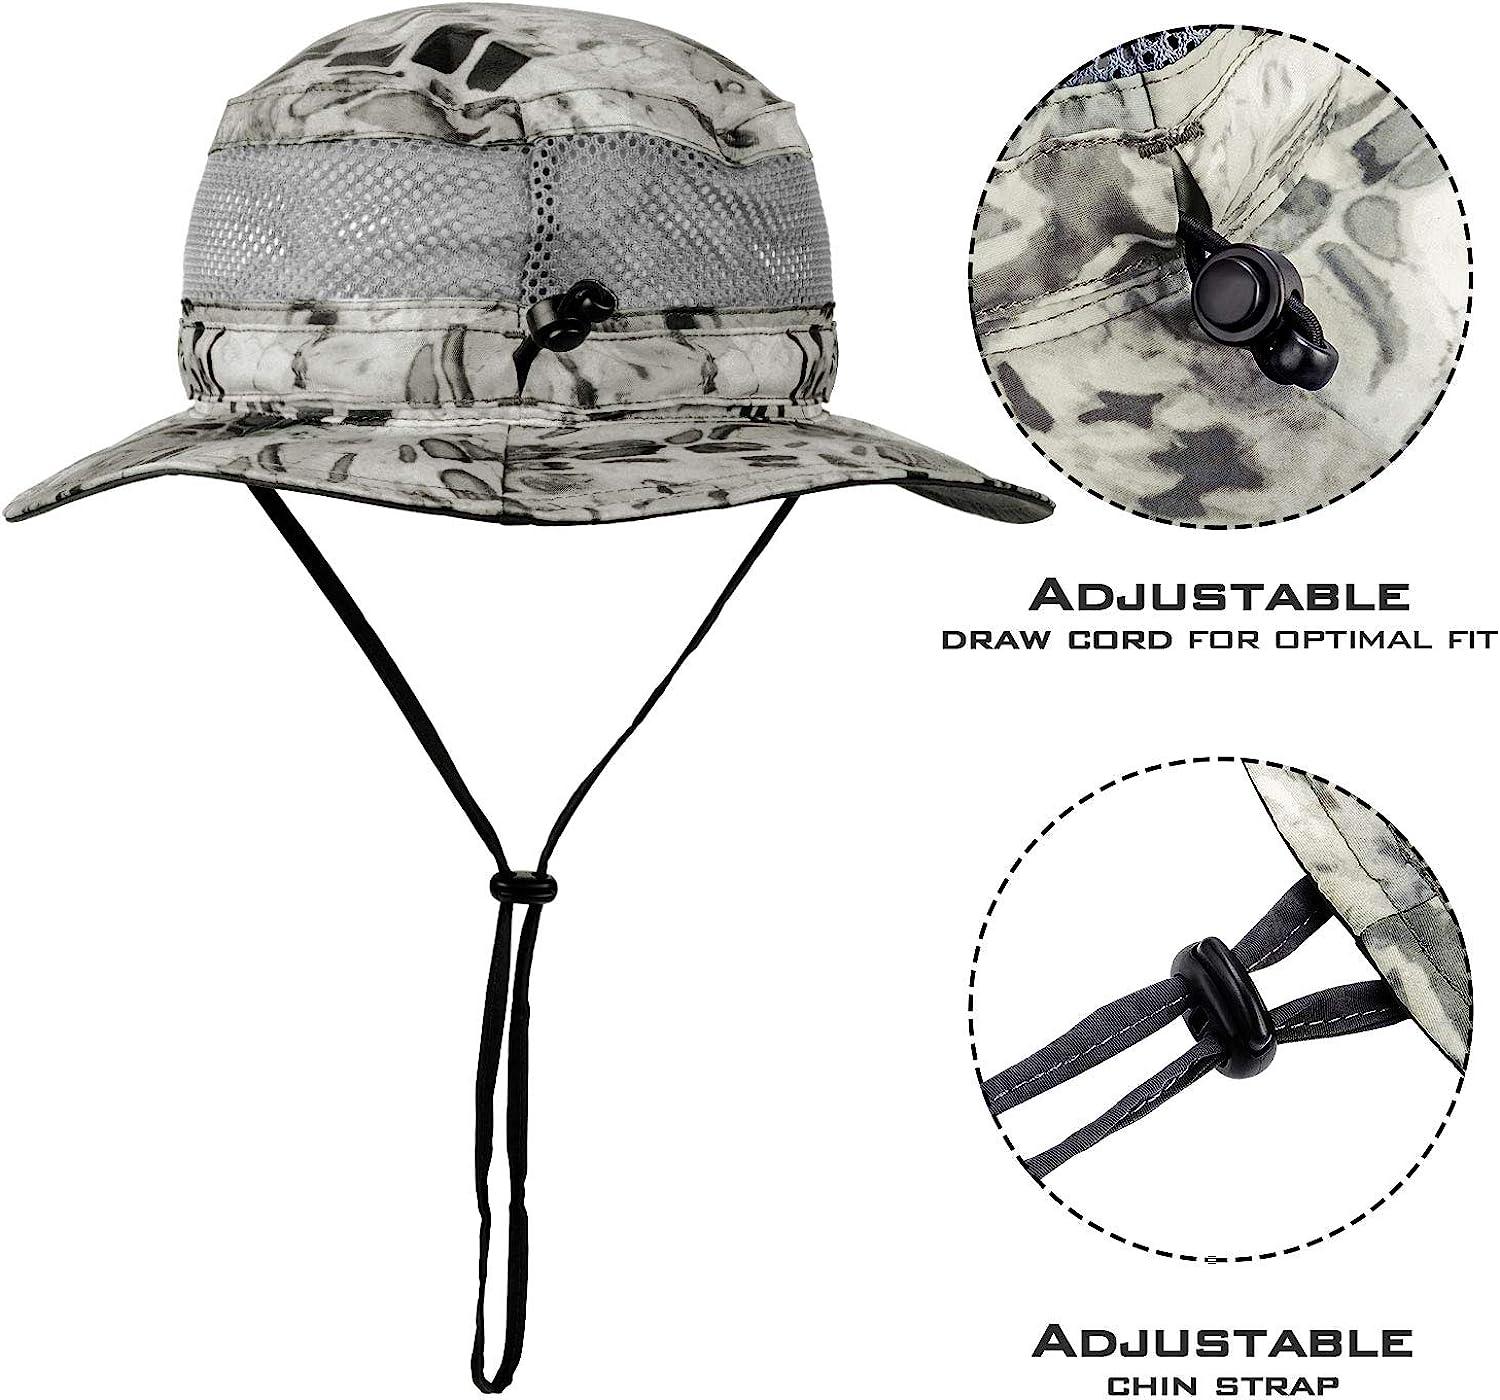 KastKing Sol Armis UPF 50 Boonie Hat - Sun Protection Hat, Fishing